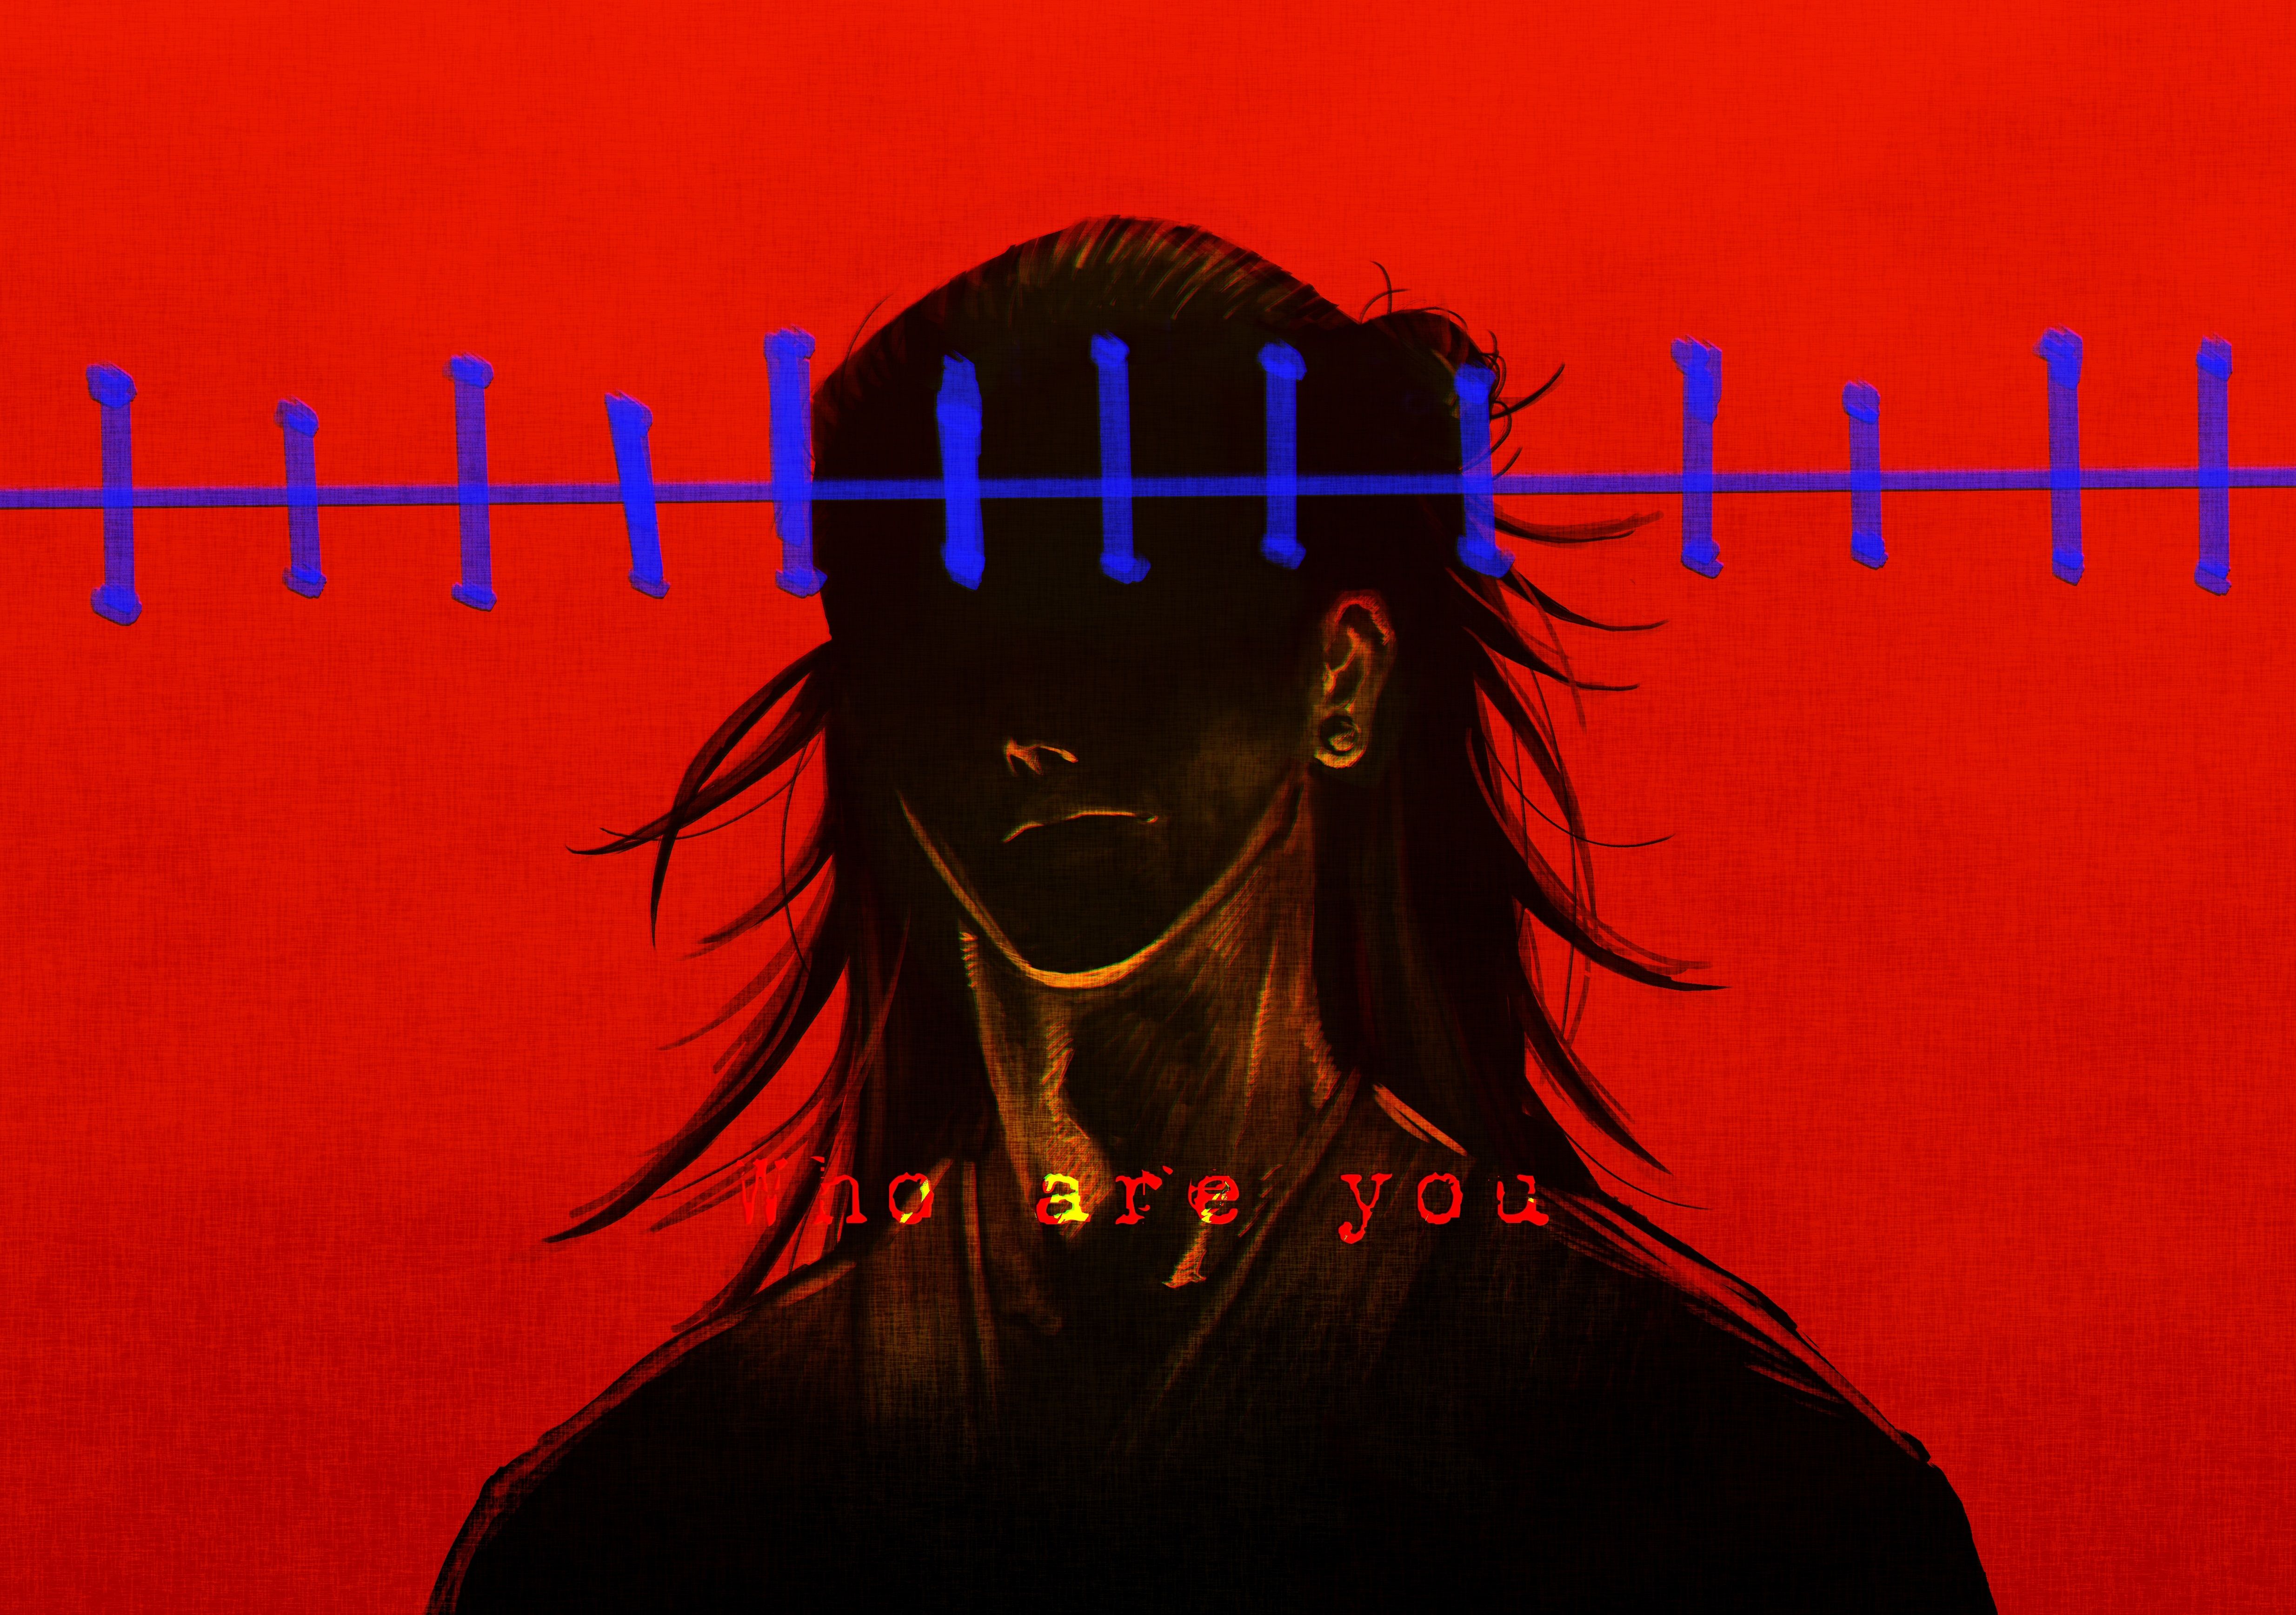 Getou Suguru Jujutsu Kaisen Wallpaper, HD Anime 4K Wallpaper, Image, Photo and Background